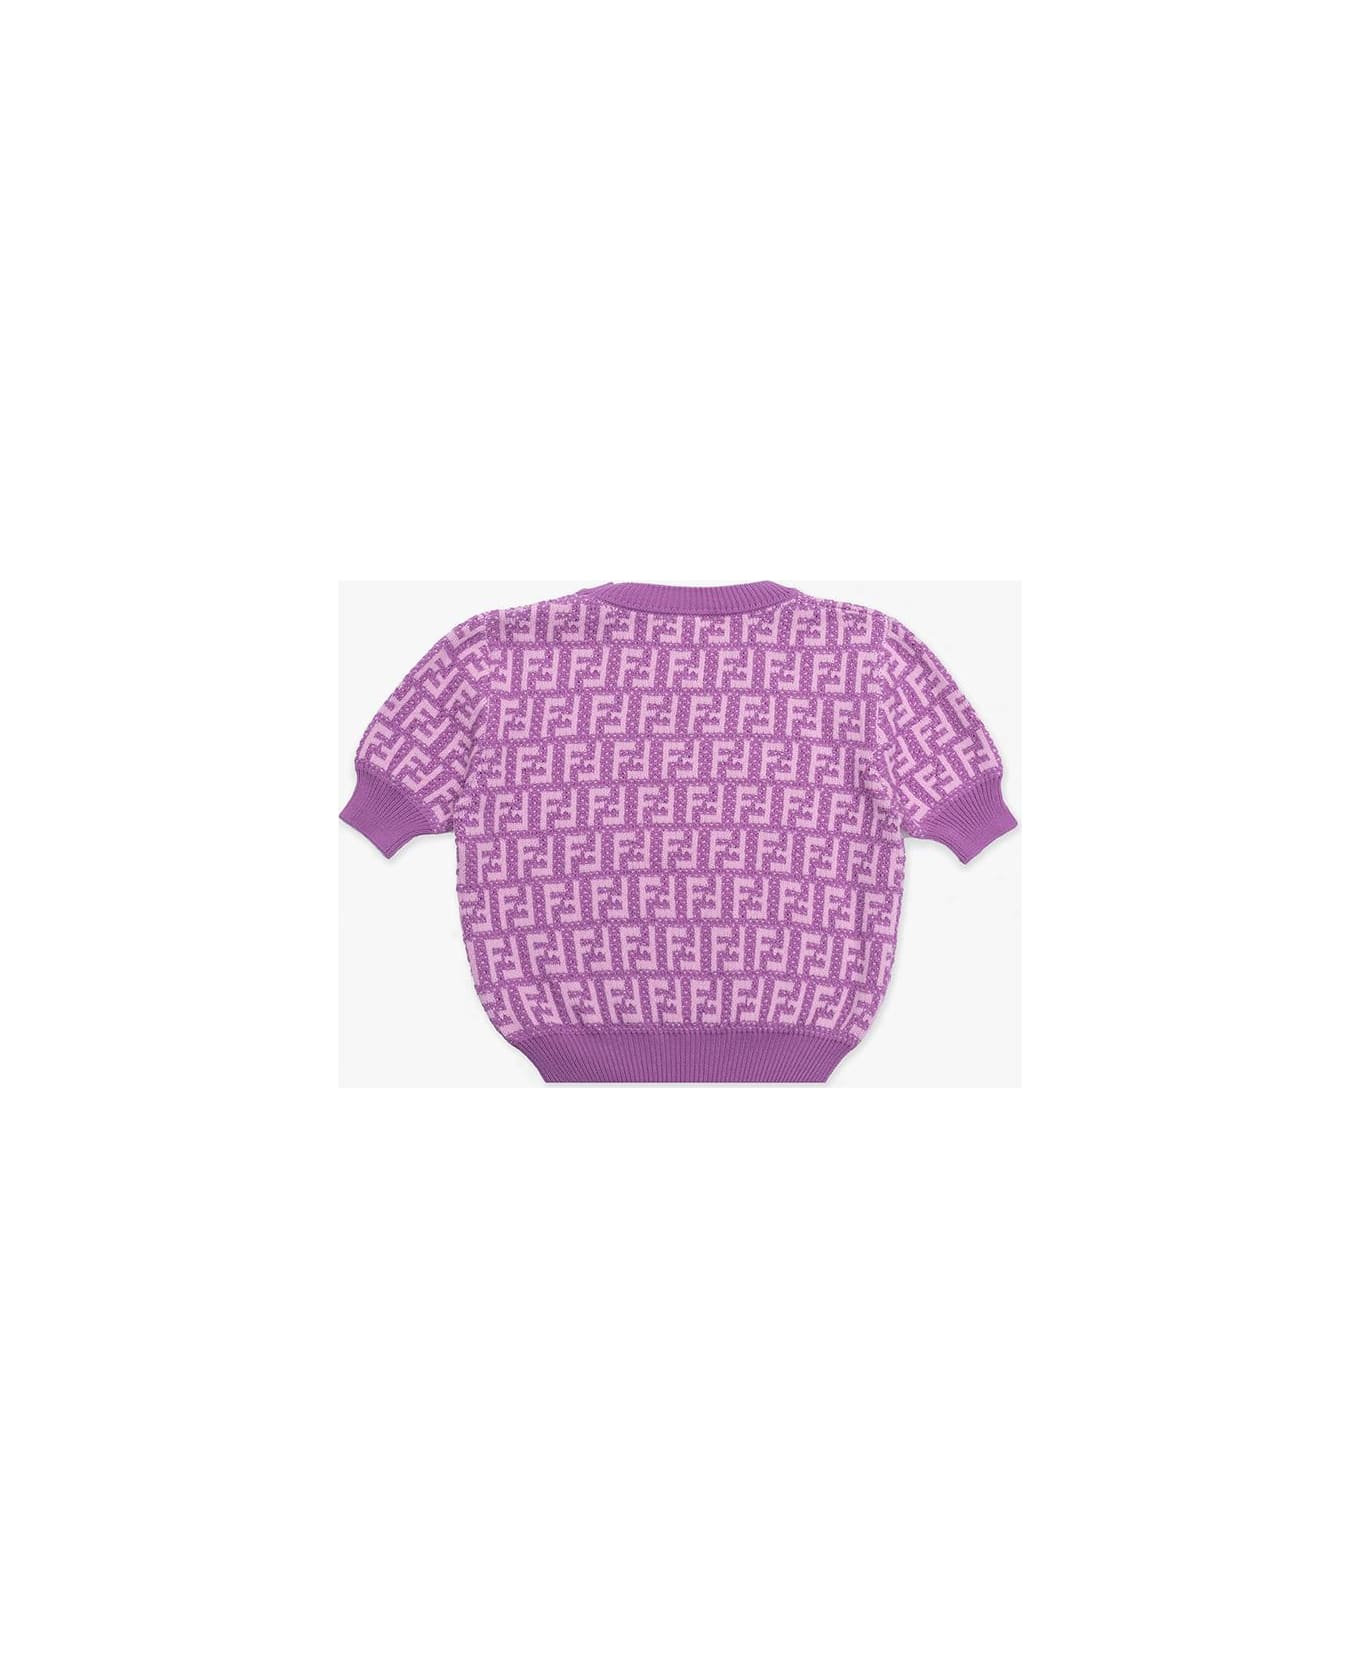 Fendi Sweater With Monogram - Multicolor